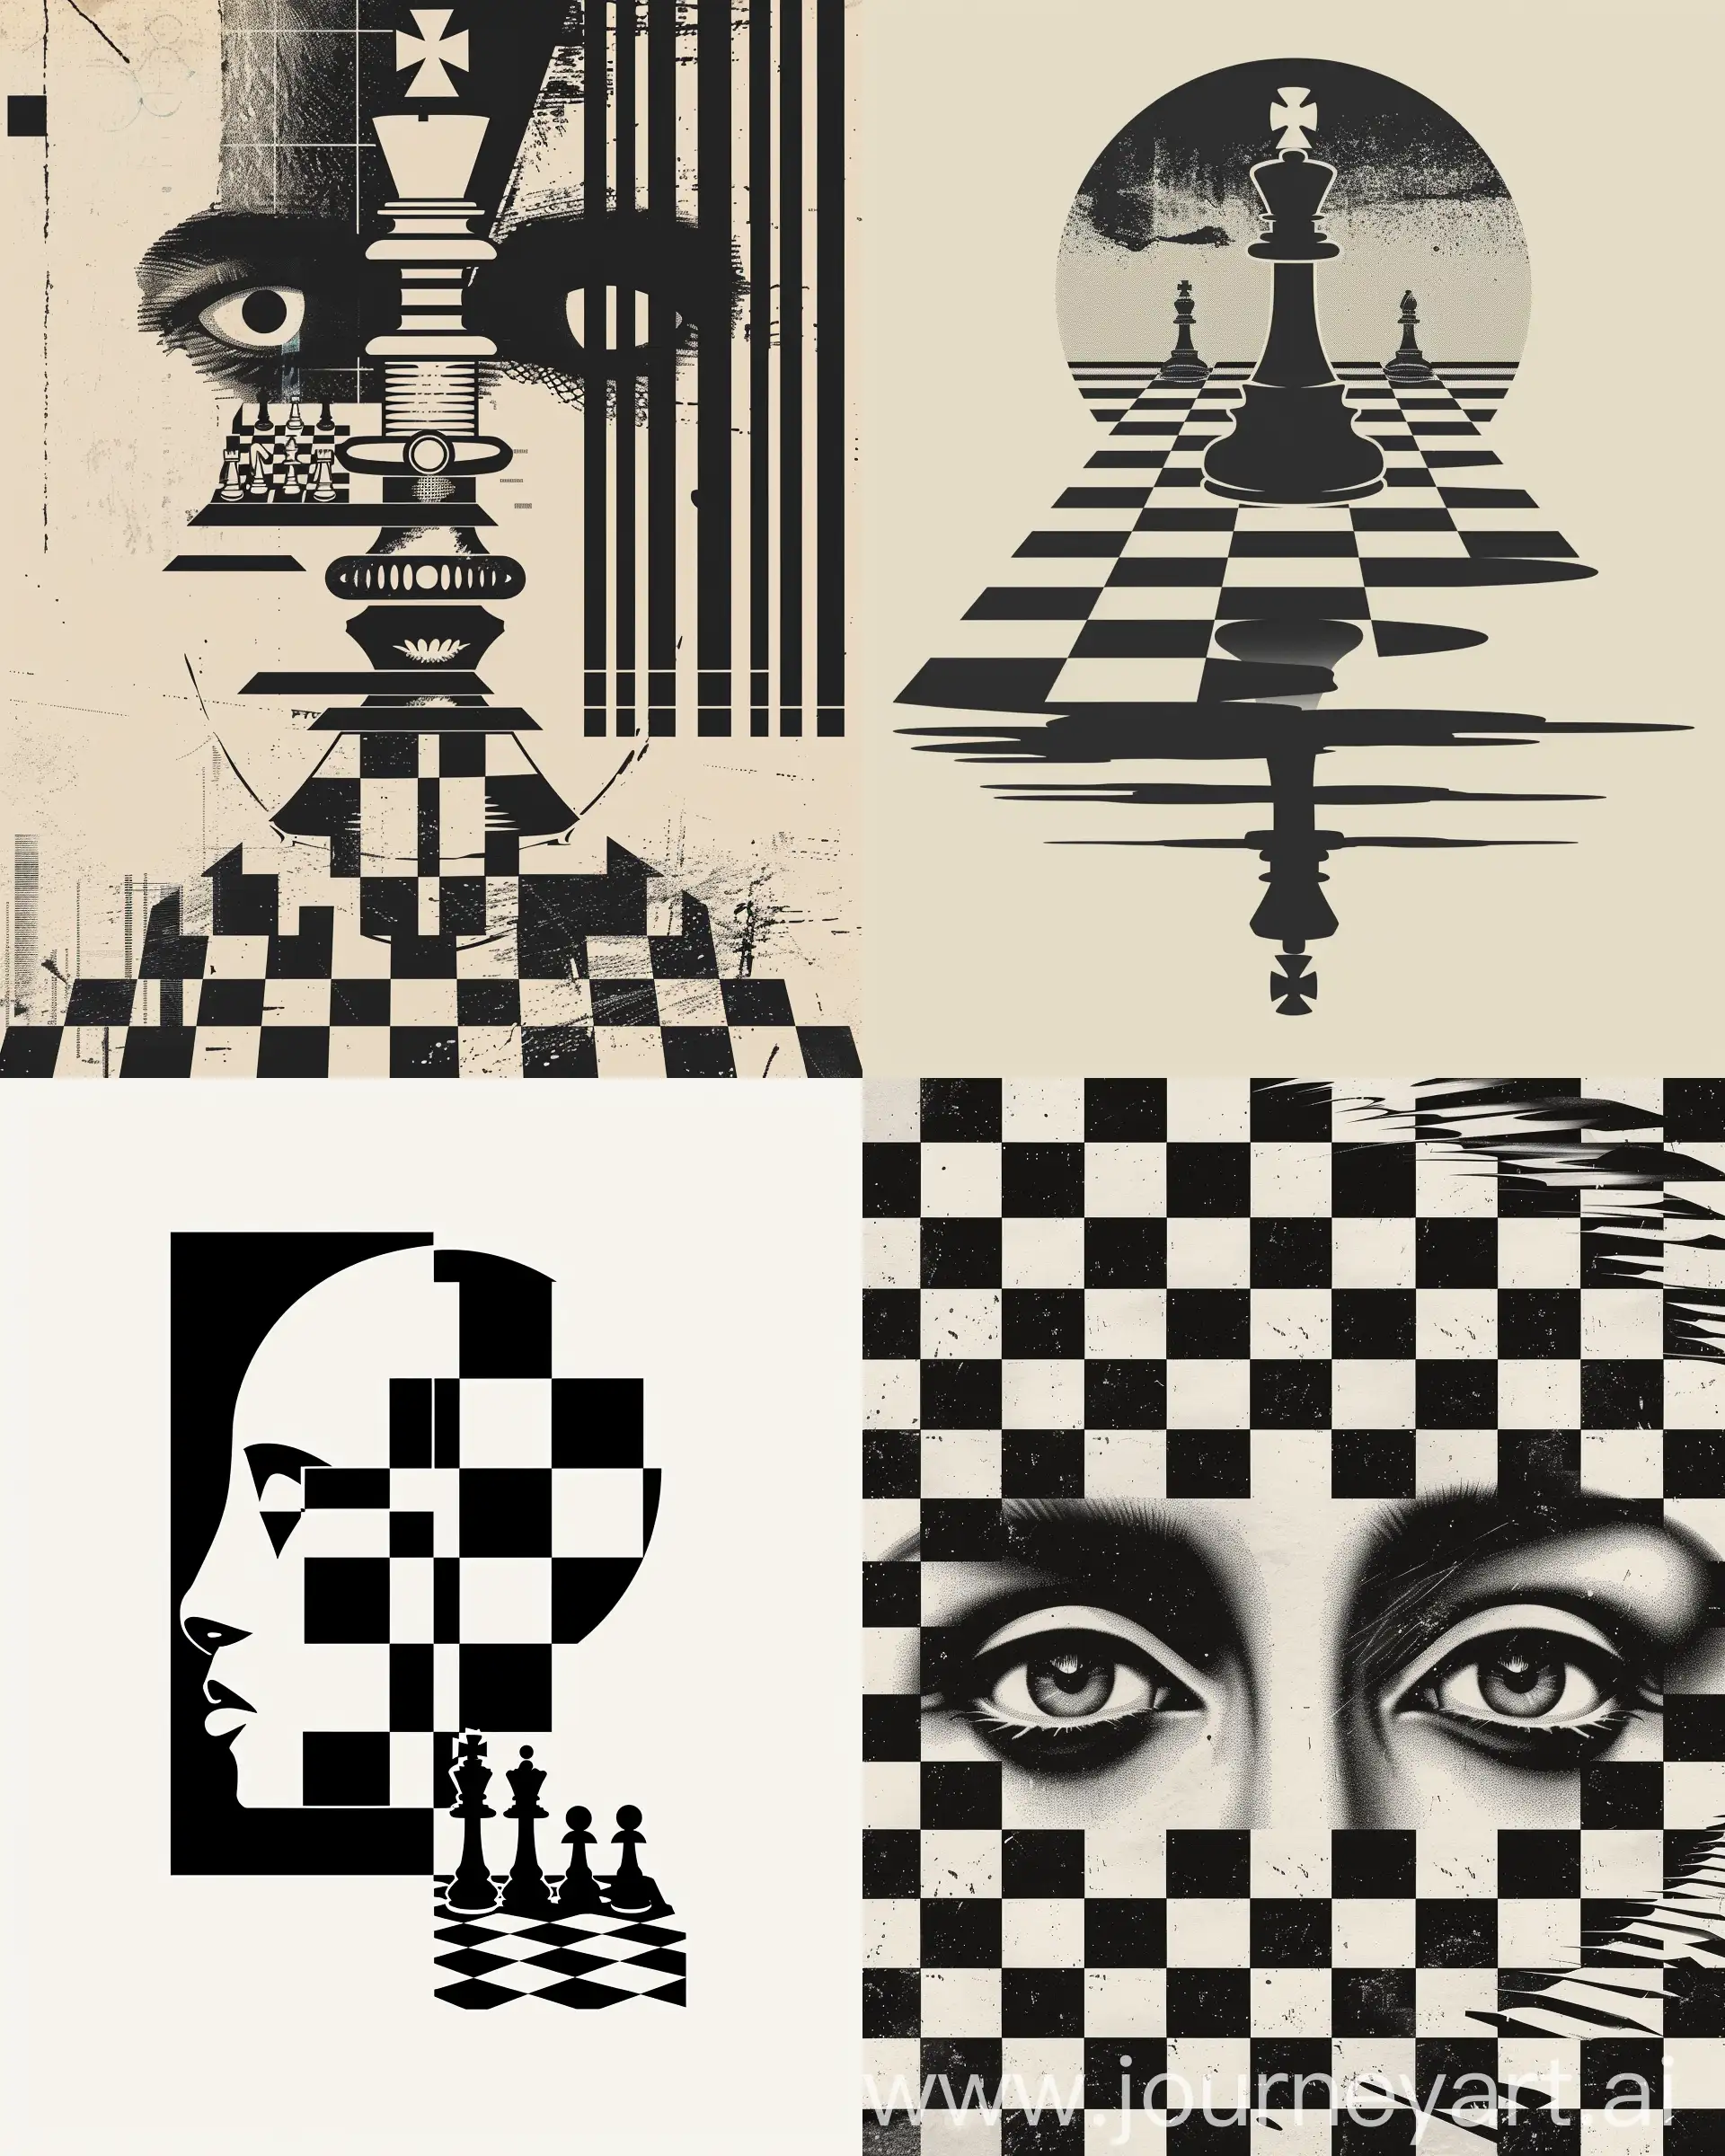 PostModern-Surrealist-Chessboard-Visual-Illusion-in-Dadaist-Logo-Design